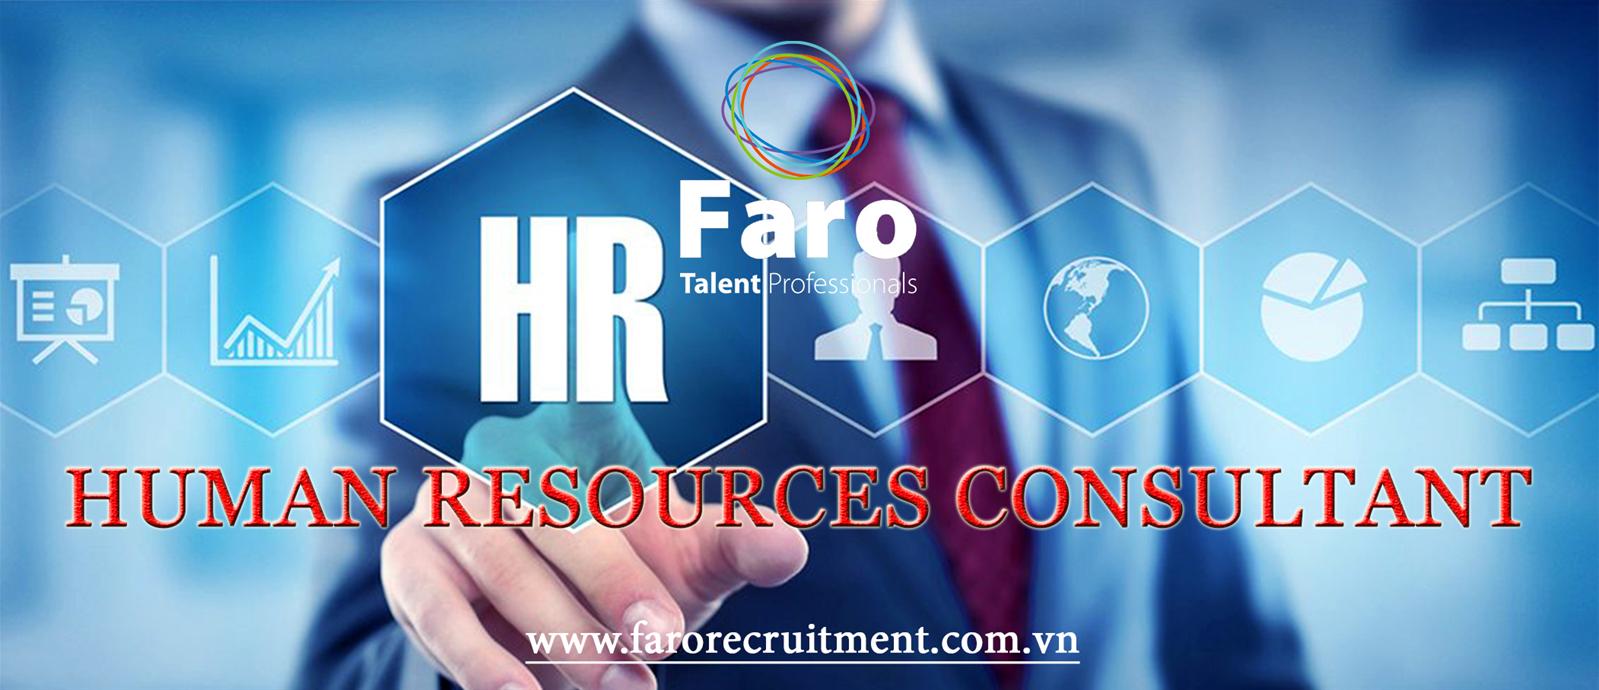 Job Opportunity in Faro Vietnam - HR Consultant